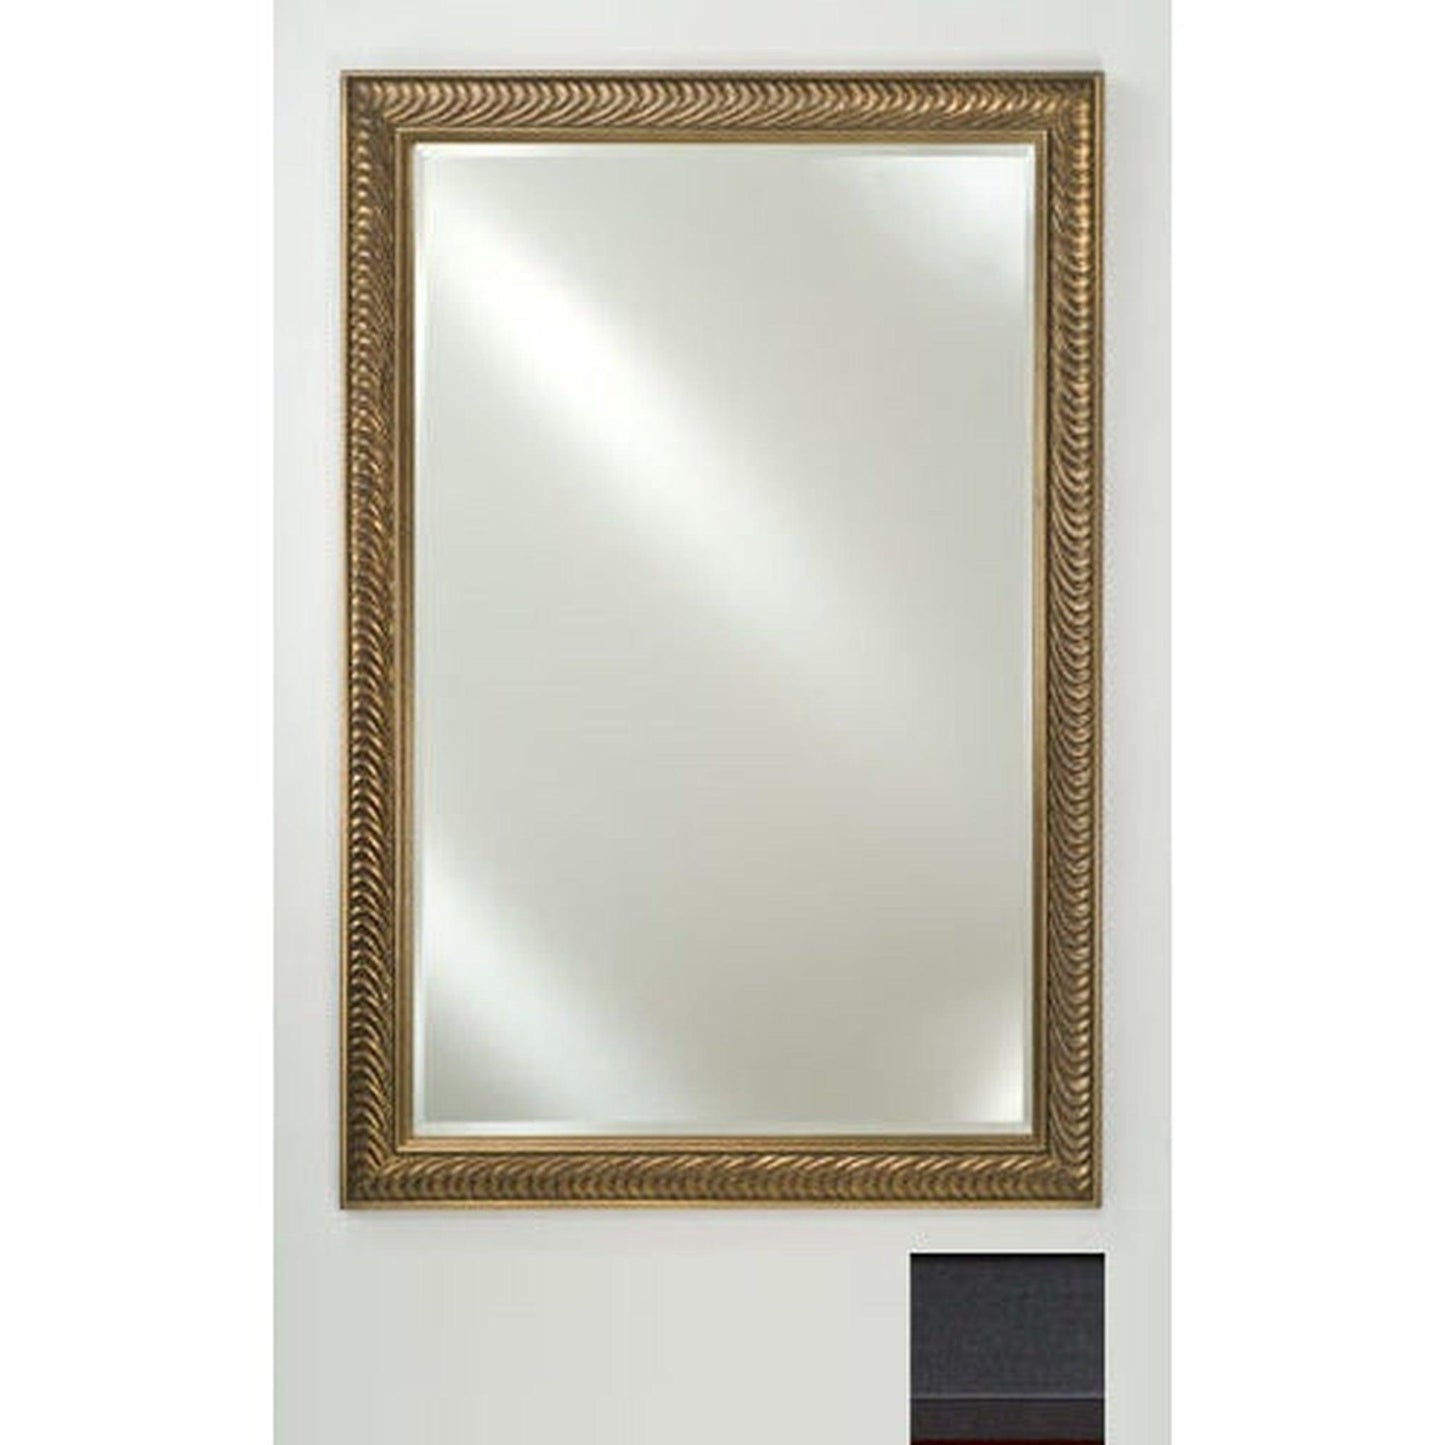 Afina Signature 20" x 26" Colorgrain Black Framed Mirror With Beveled Edge